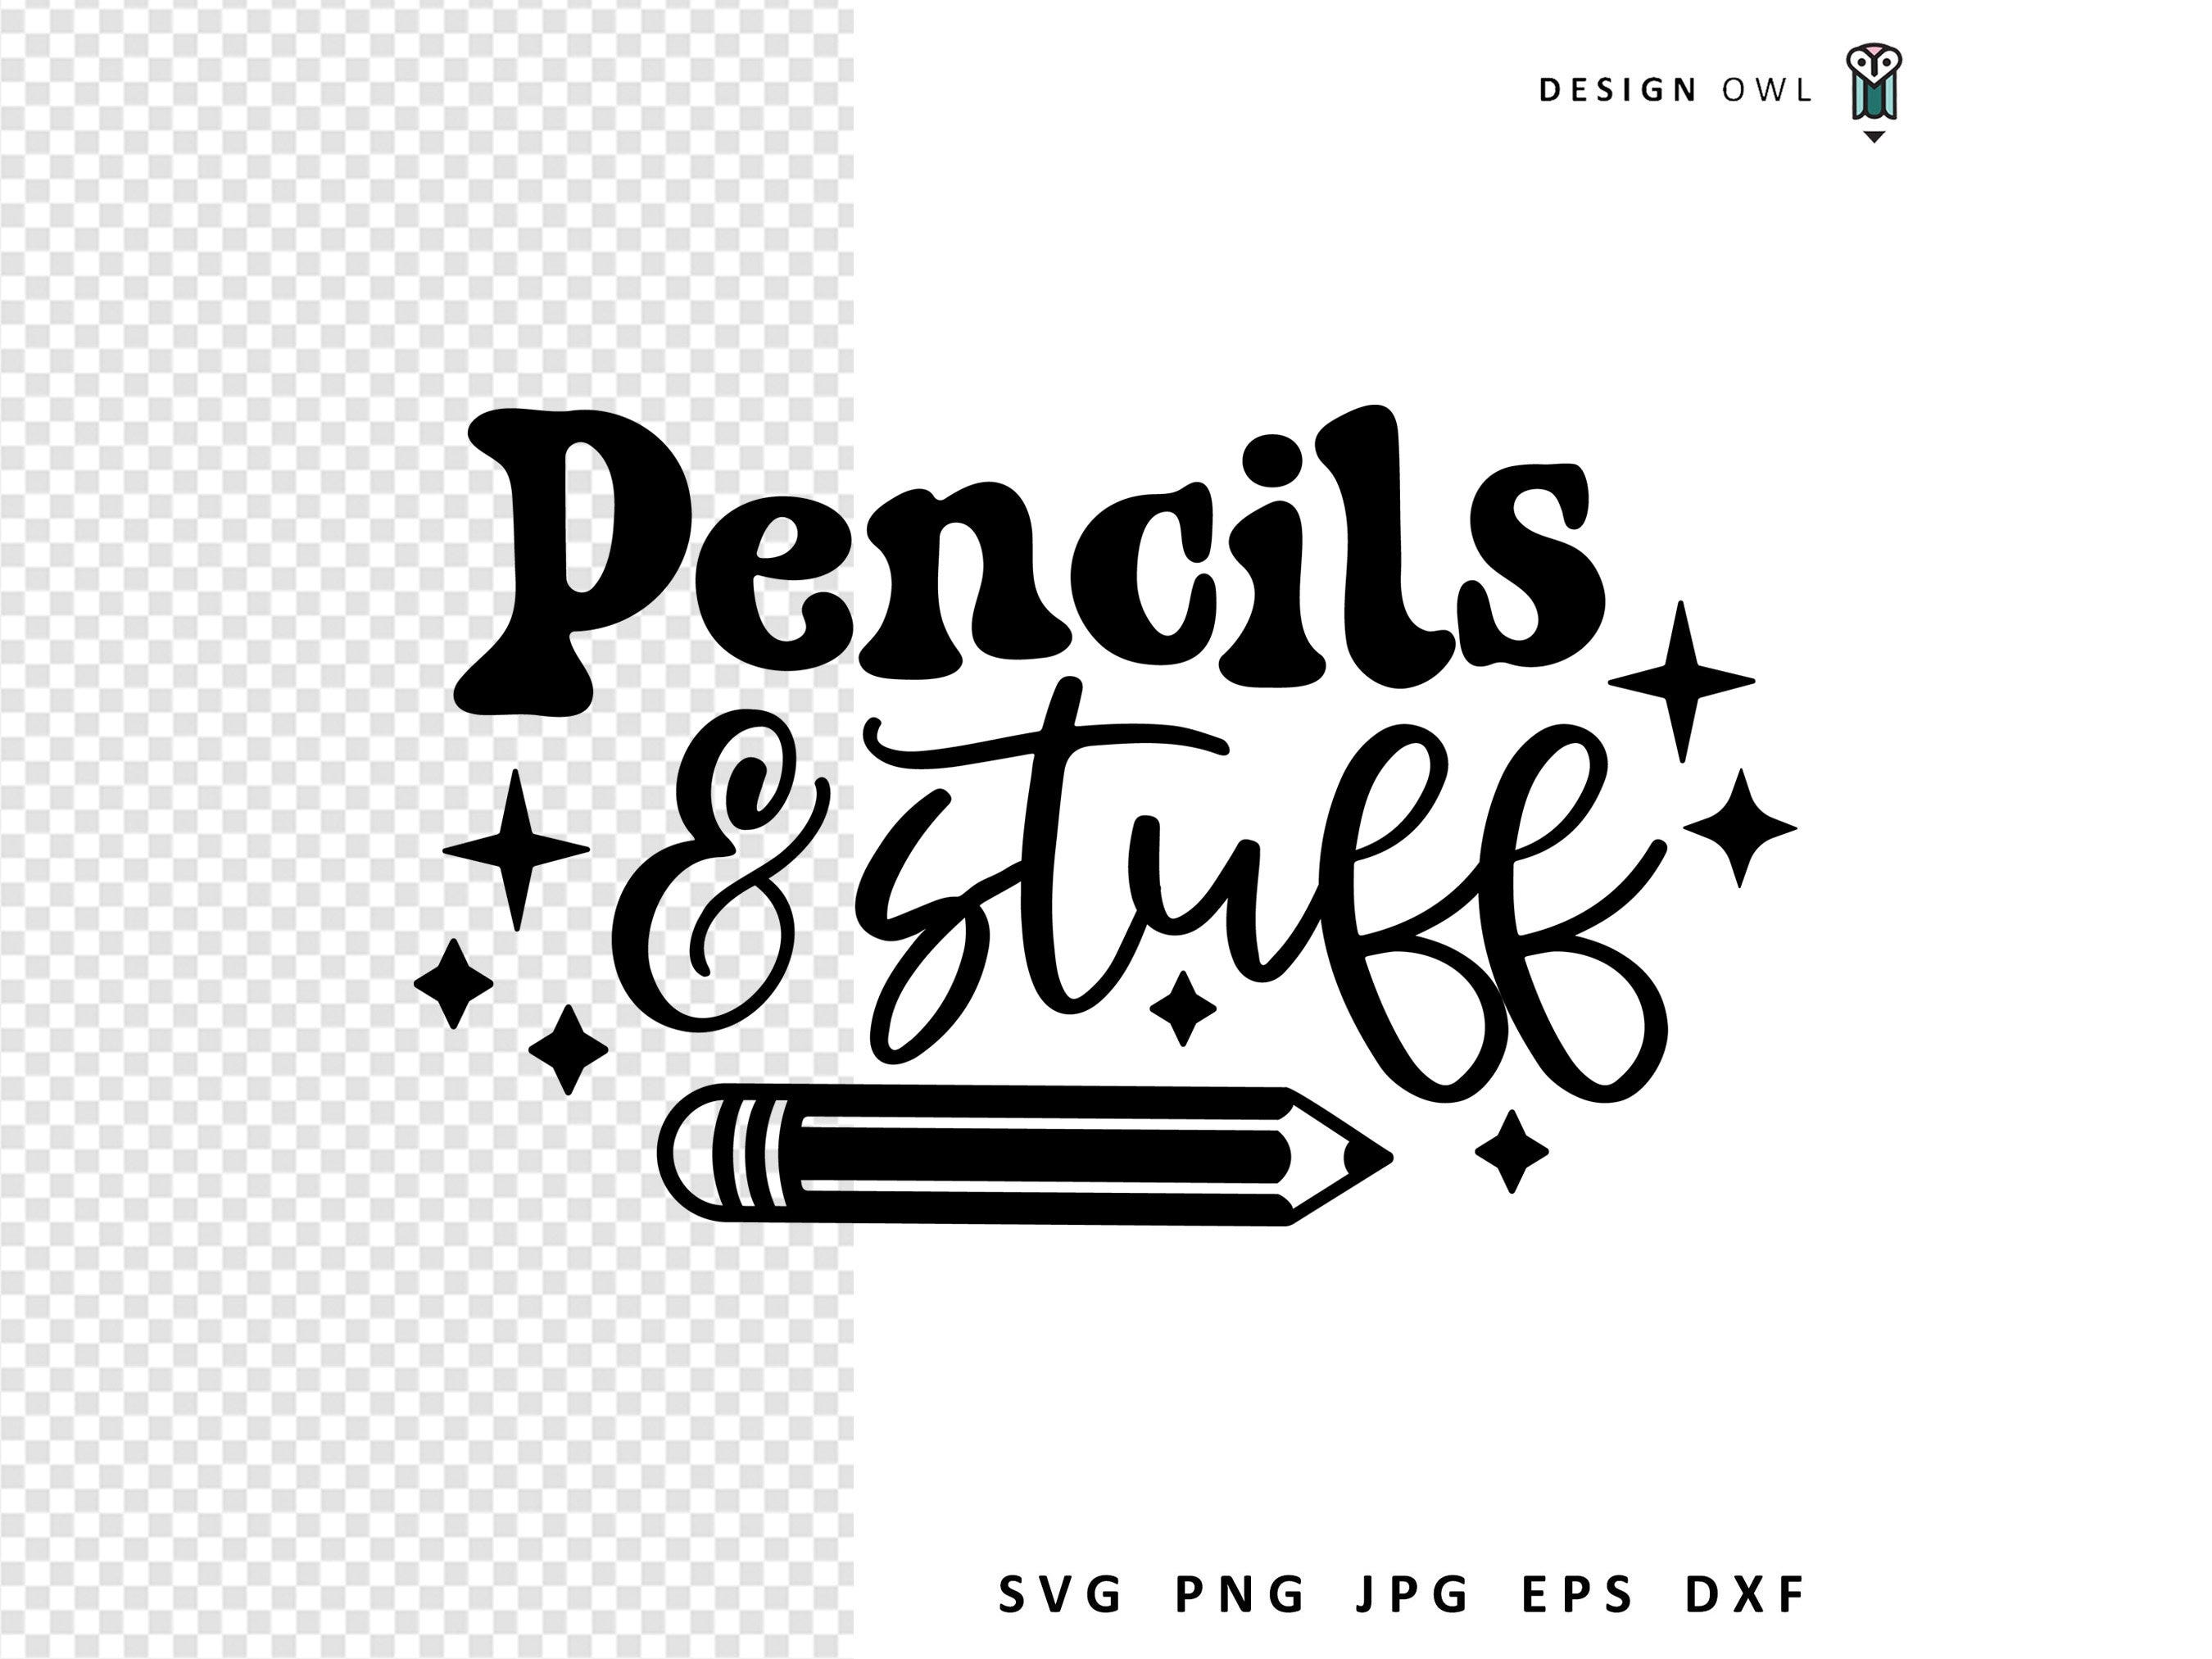 Pencils and Stuff SVG File, Pencil Case Design, Digital Download, Cut files for Cricut, Craft room organisation, Classroom SVG